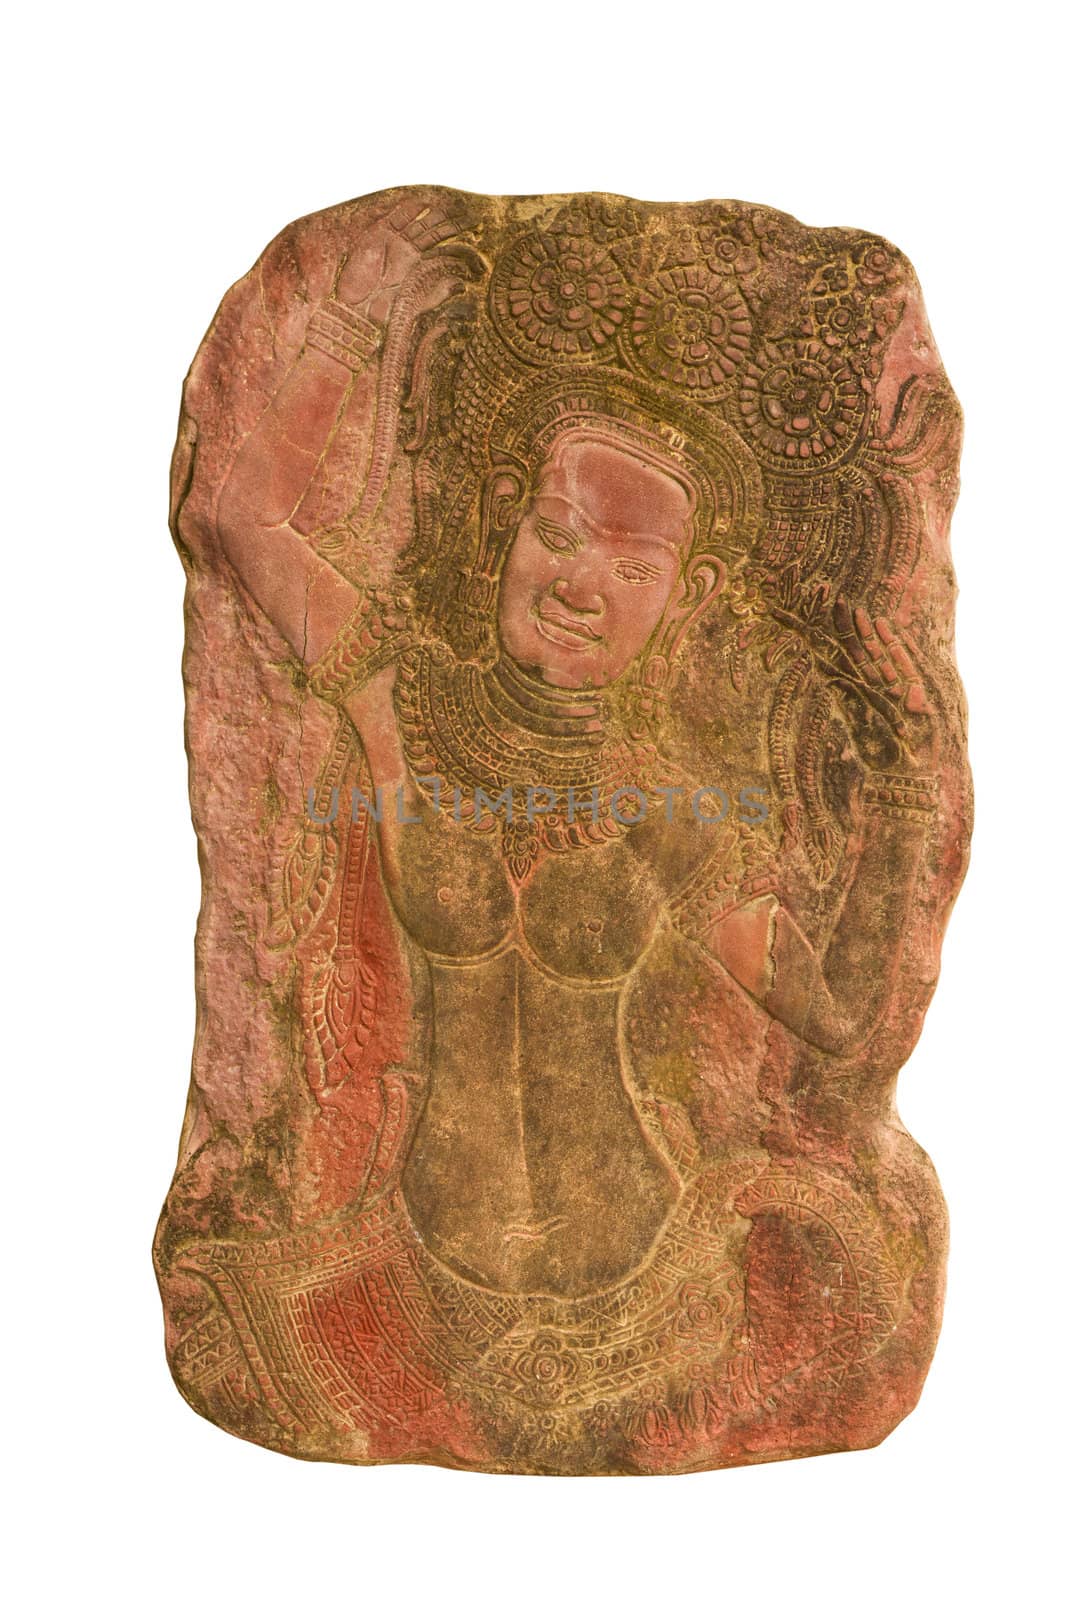 Sandstone carvings woman dancsing by stoonn